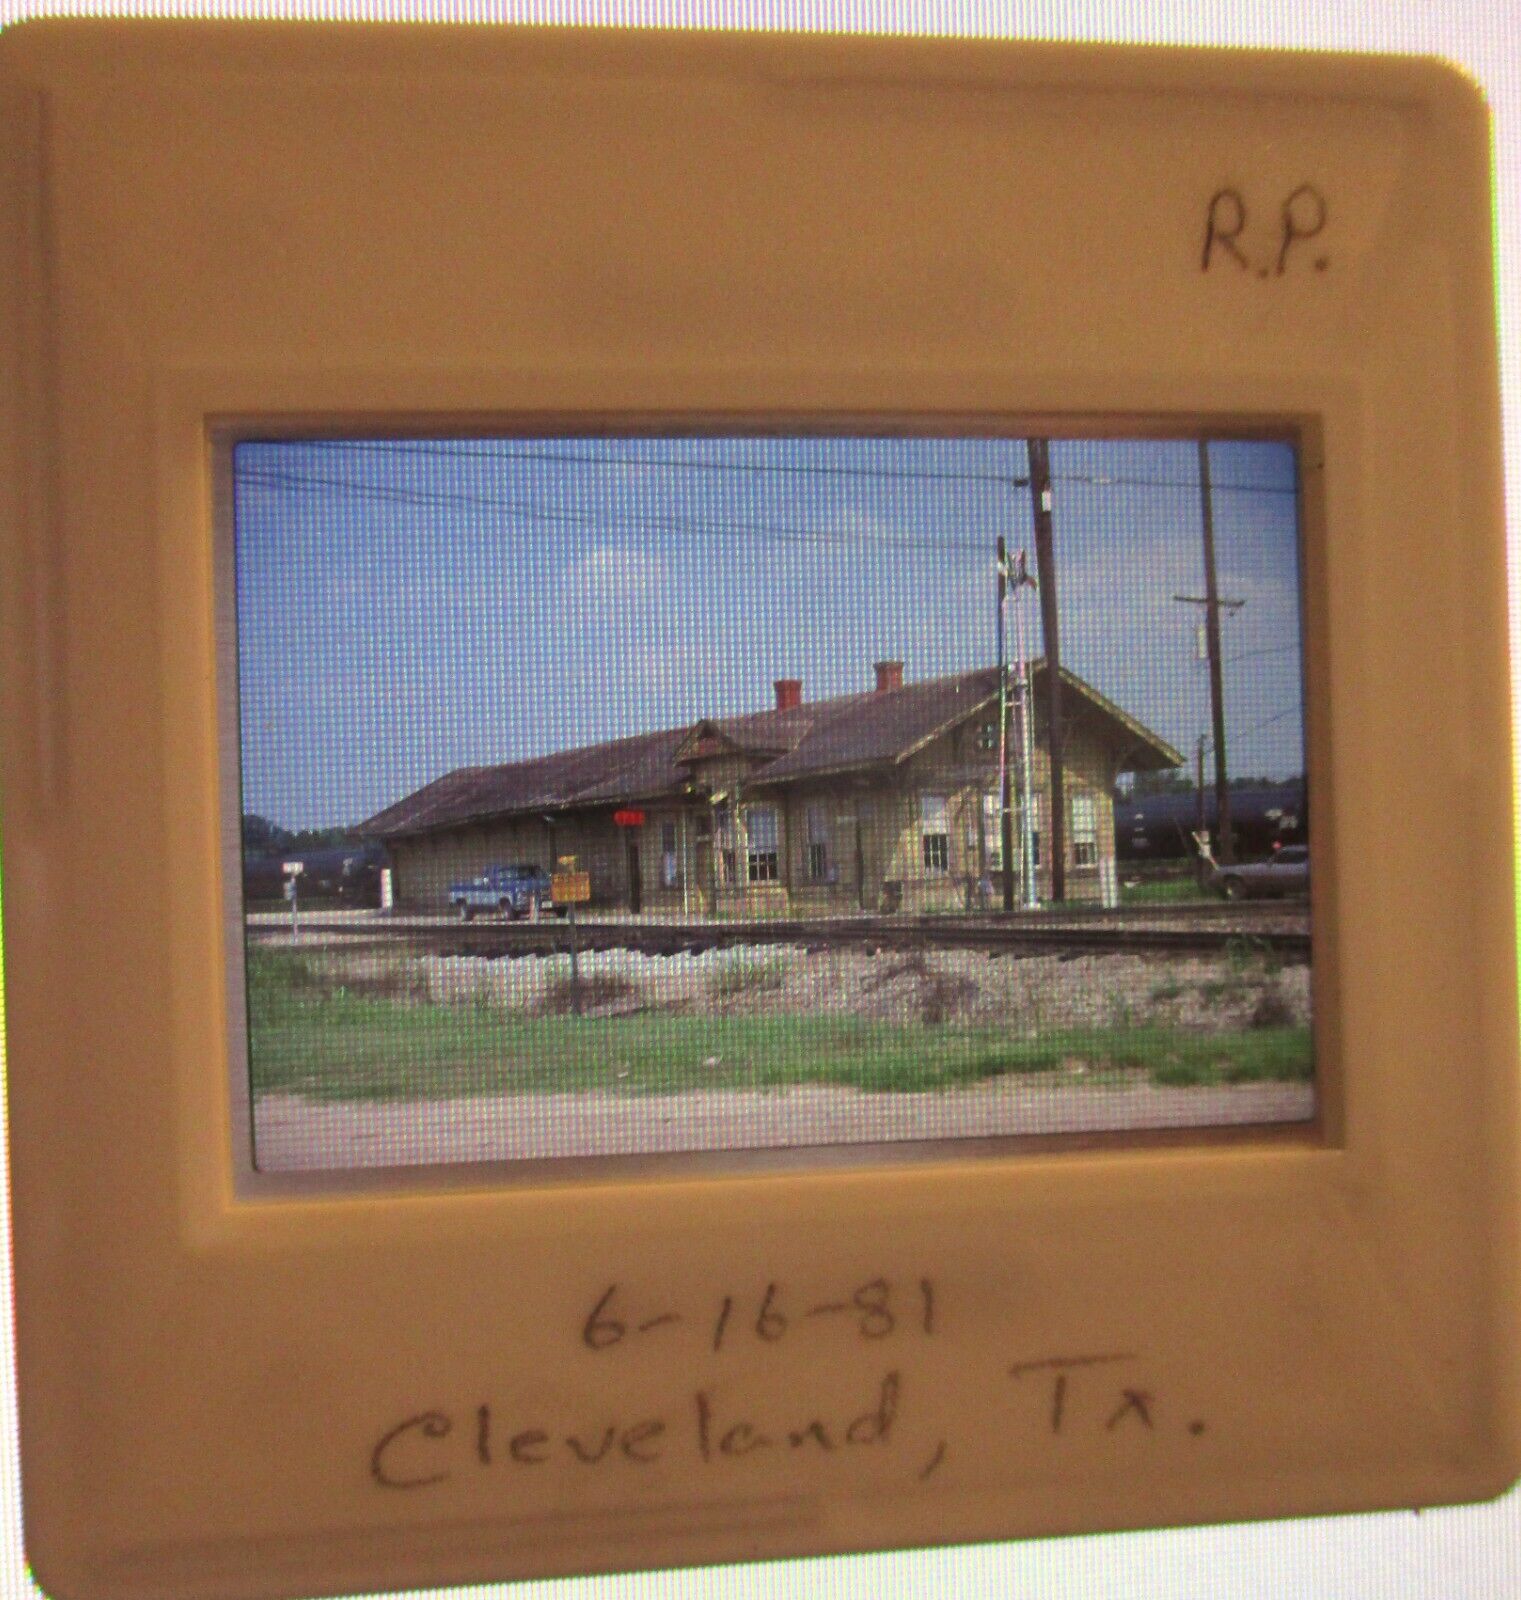 1981 - 35mm photo - Vintage slide - Railroad - train Depot - Cleveland, TX